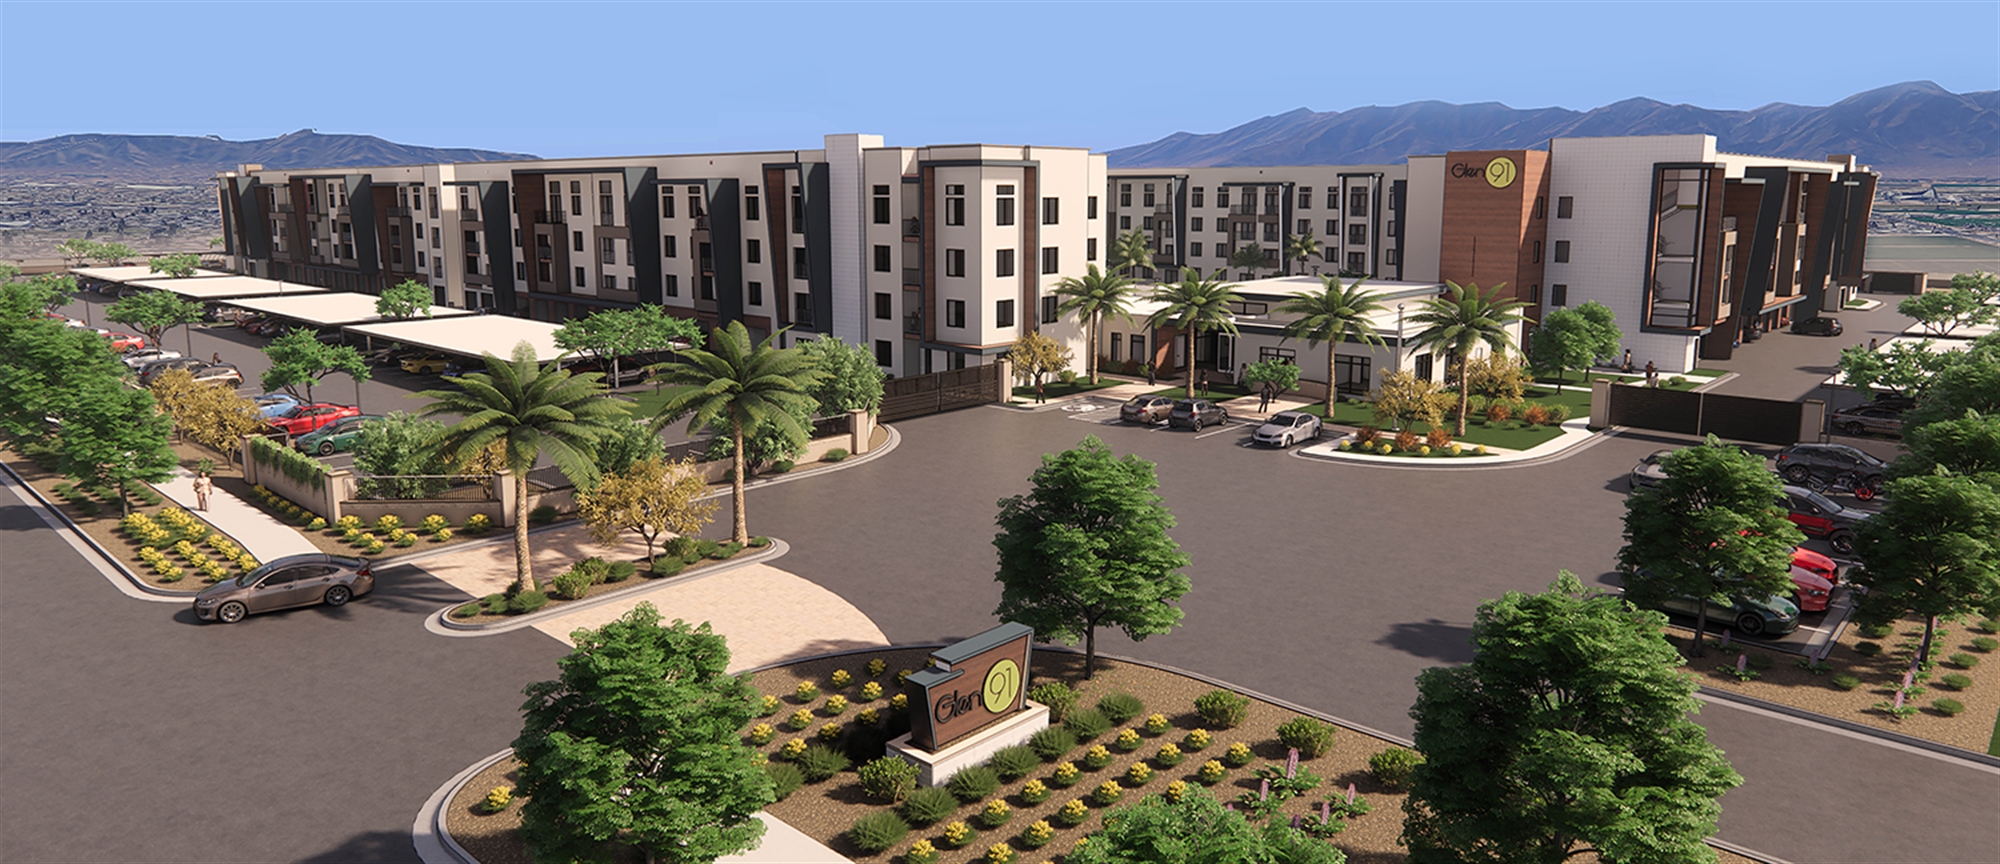 Glen 91 Luxury Apartments – Glendale, AZ